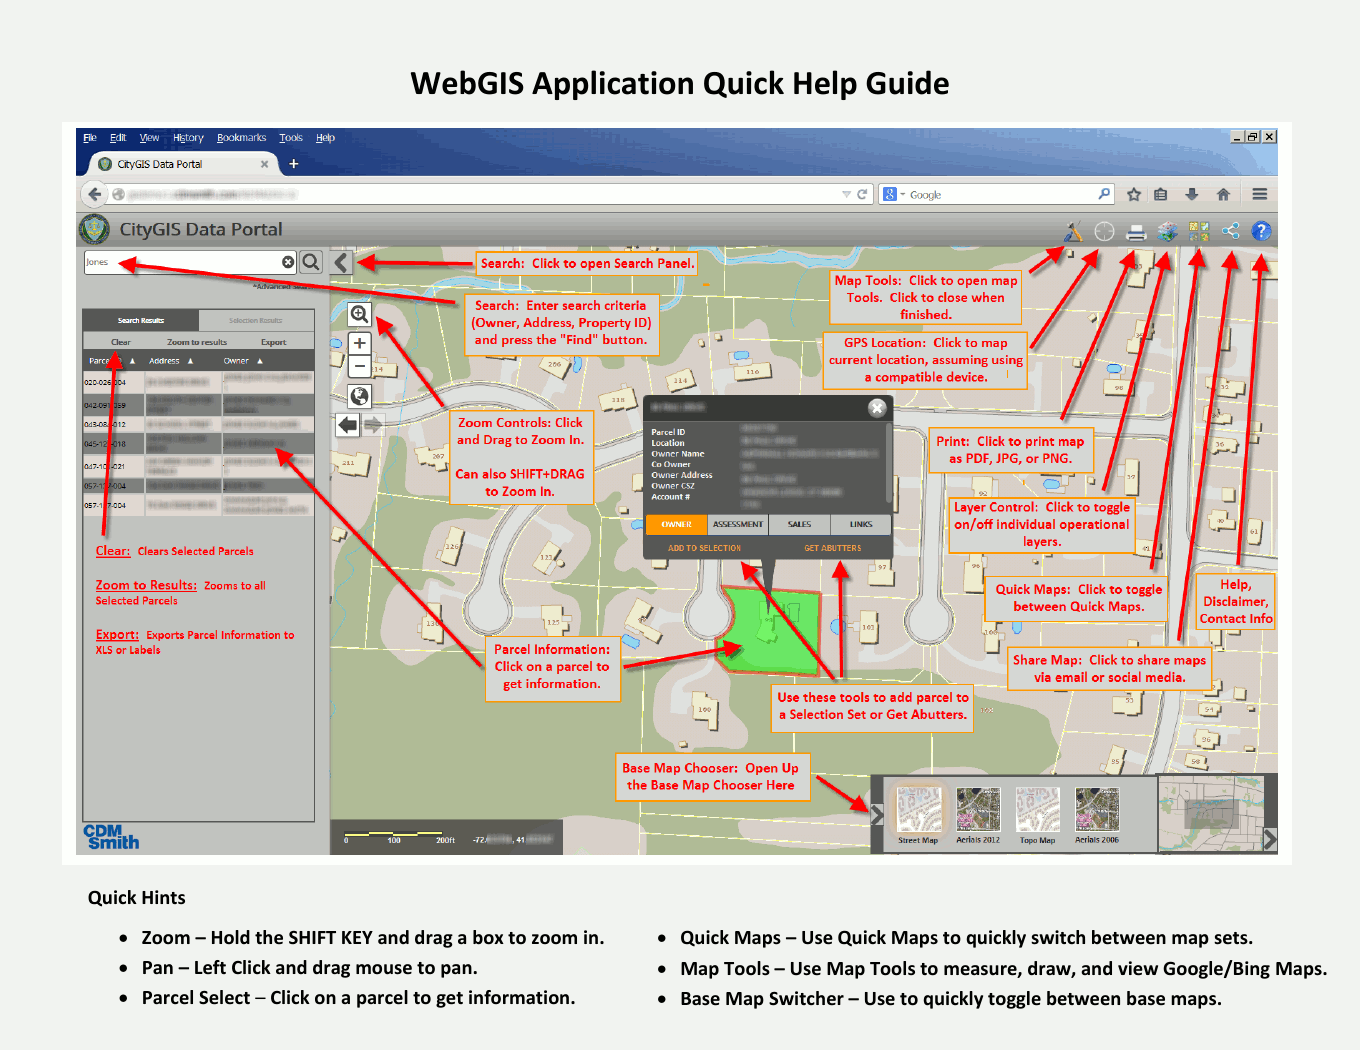 WebGIS Application Overview